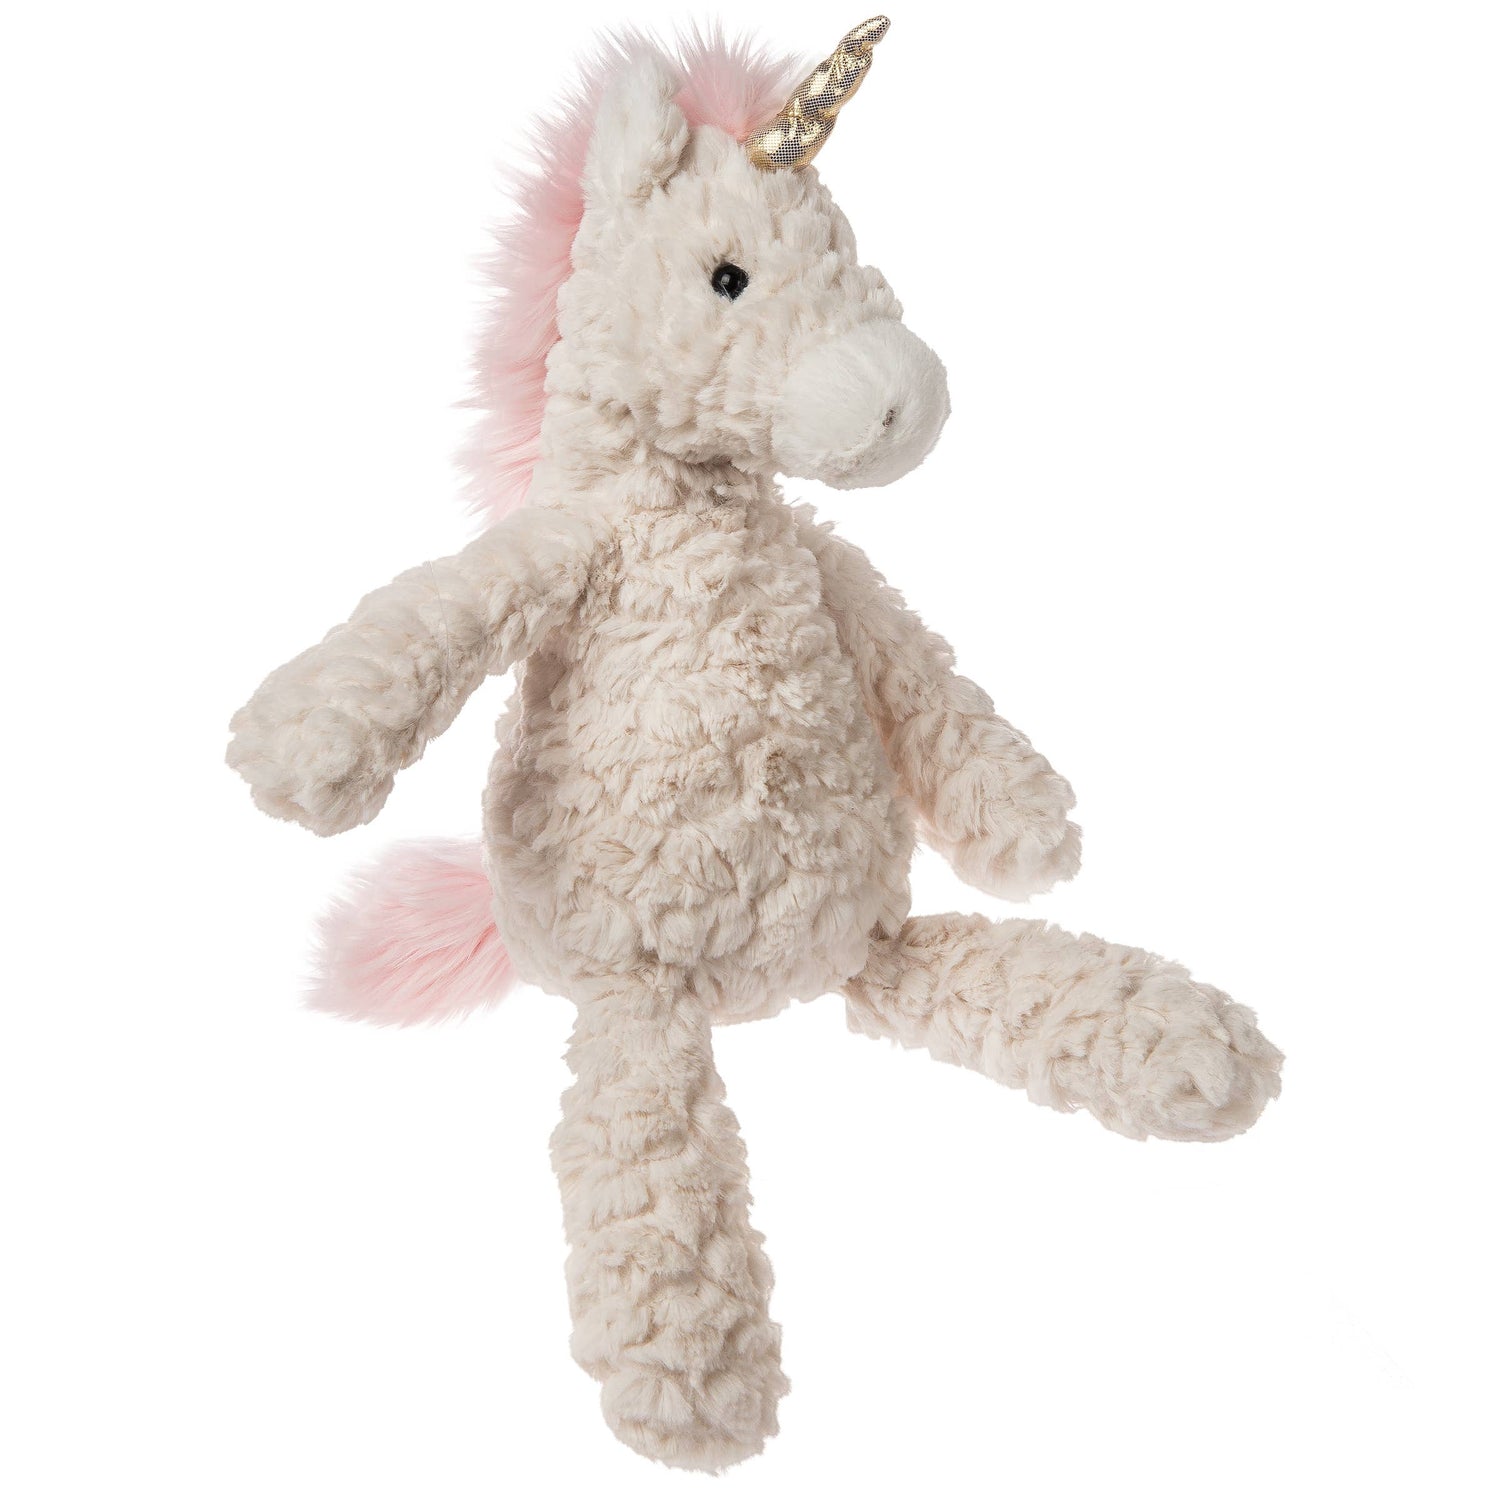 Large Creamy White Stuffed/Plush Unicorn Toy